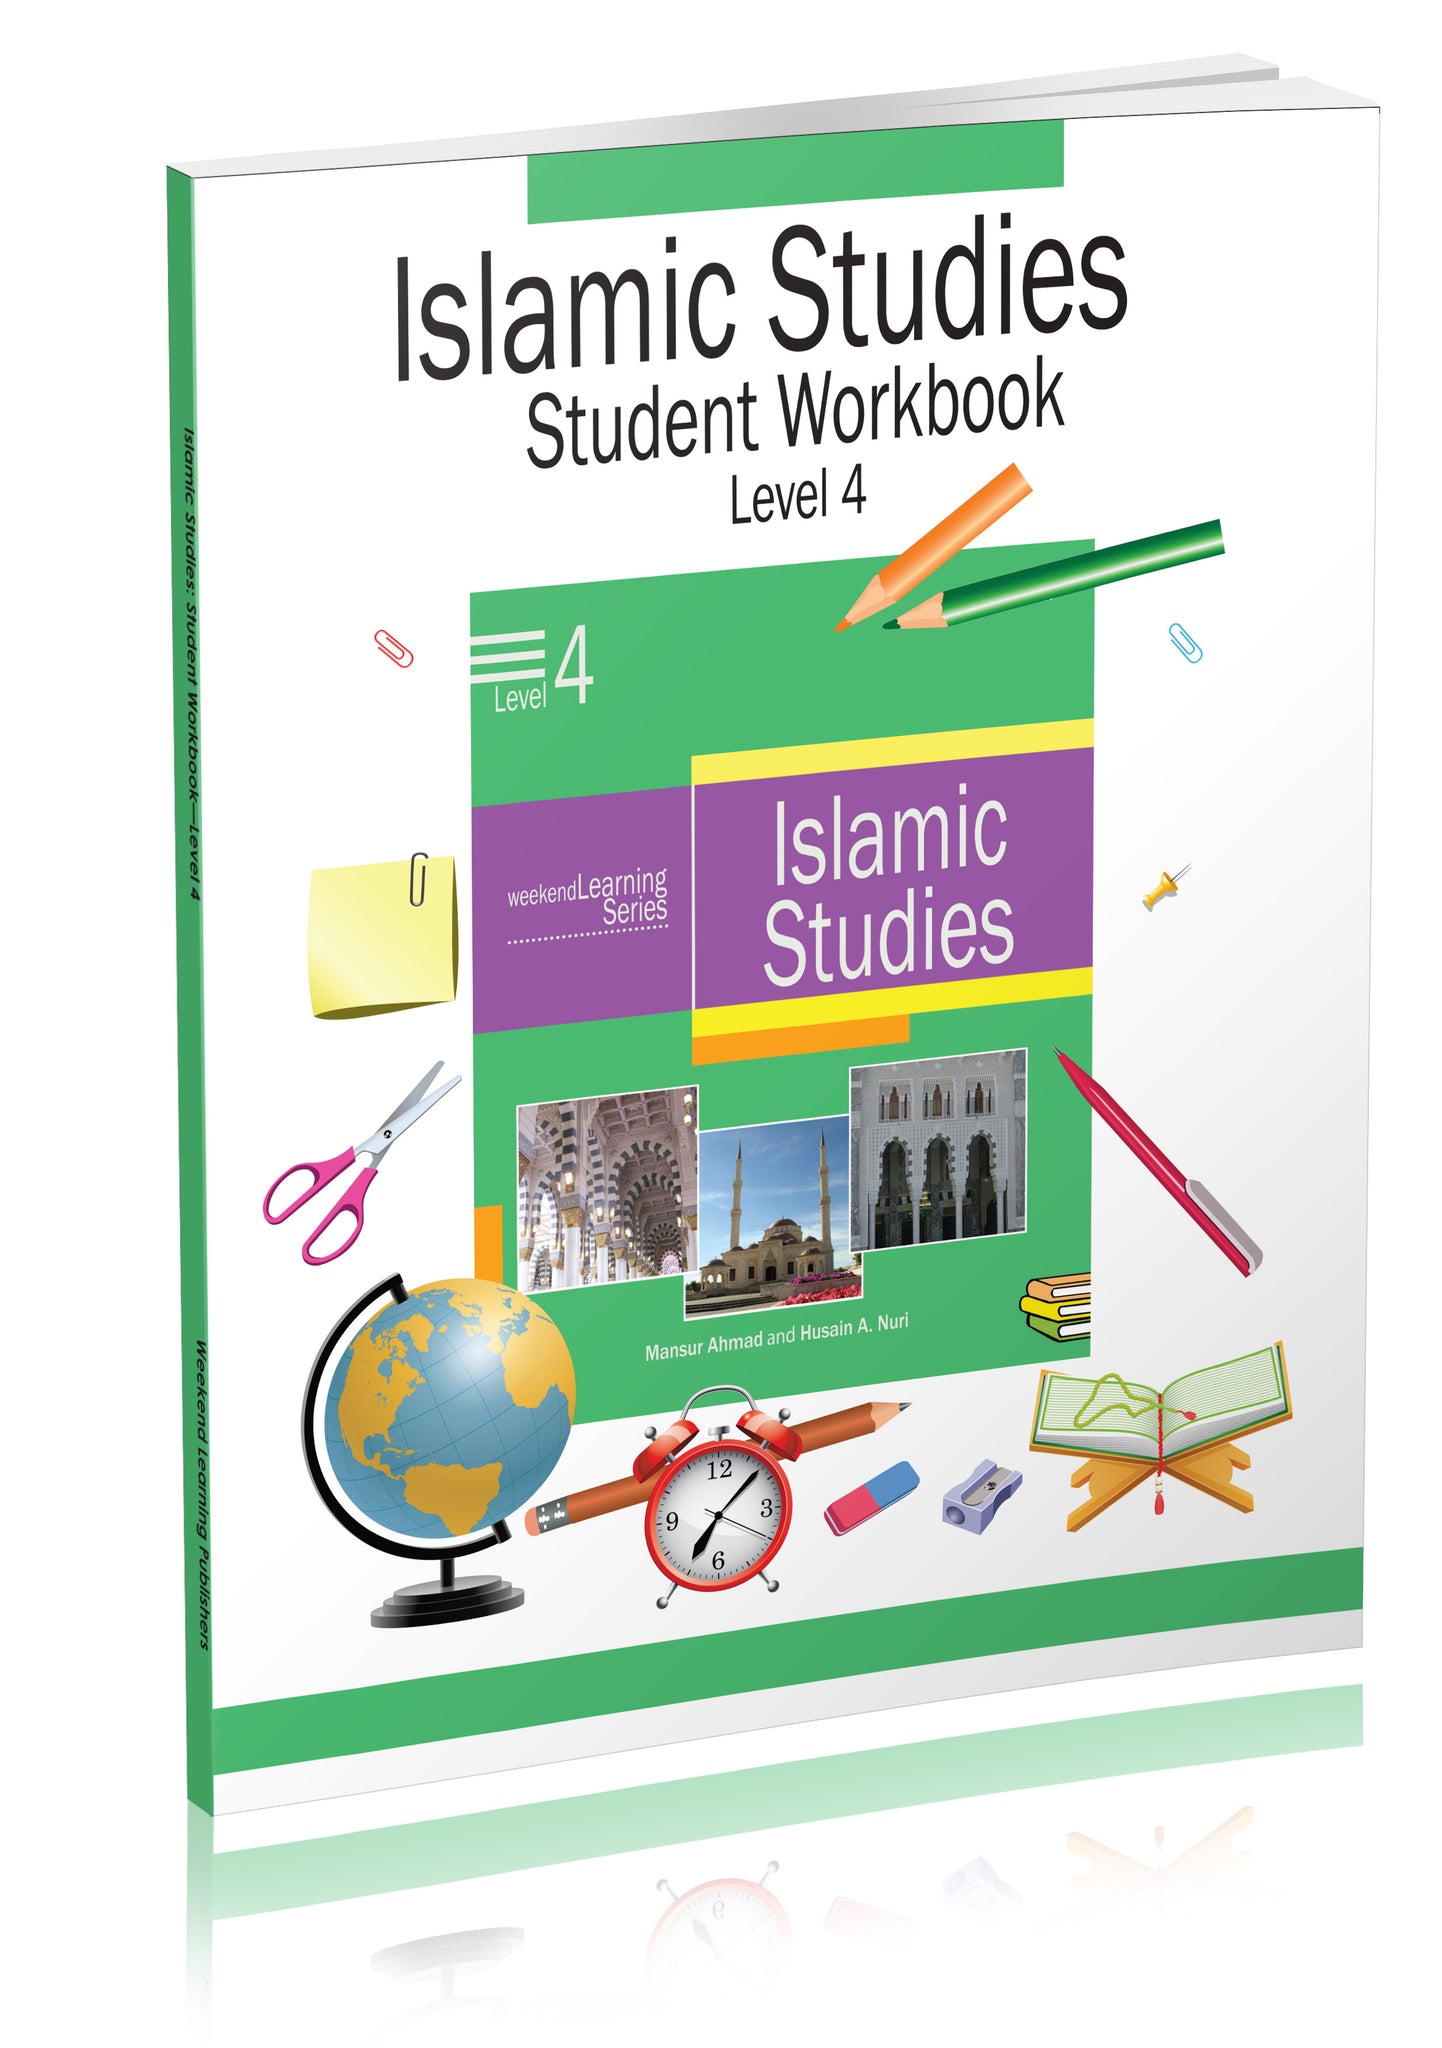 Student Workbook - Islamic Studies Level 4